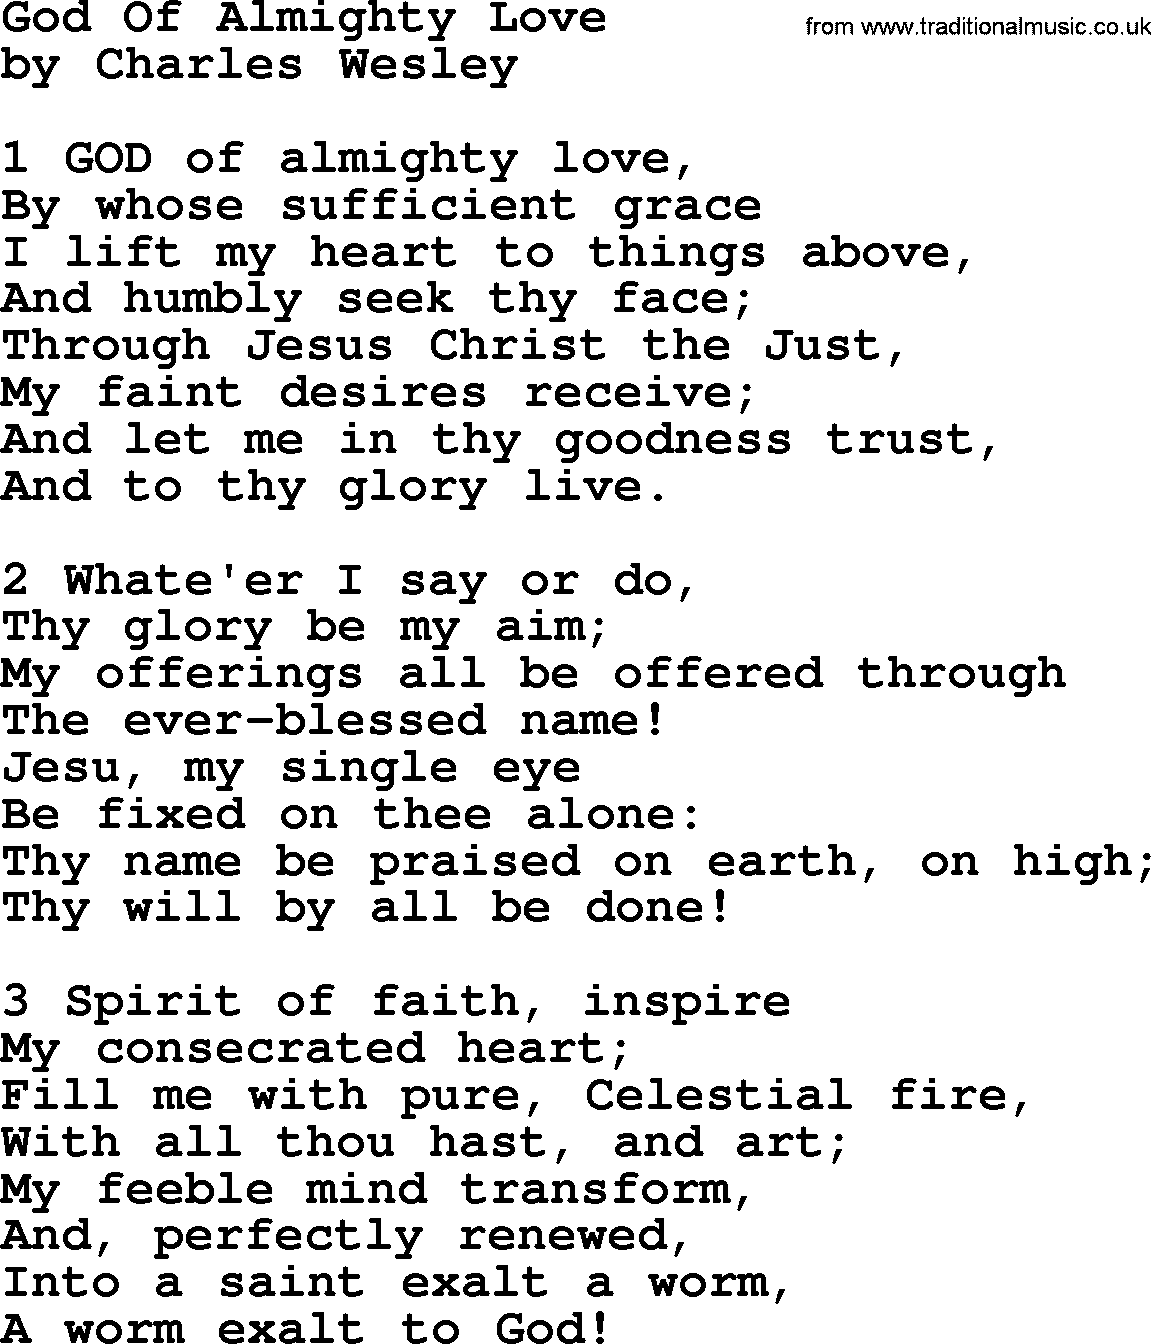 Charles Wesley hymn: God Of Almighty Love, lyrics